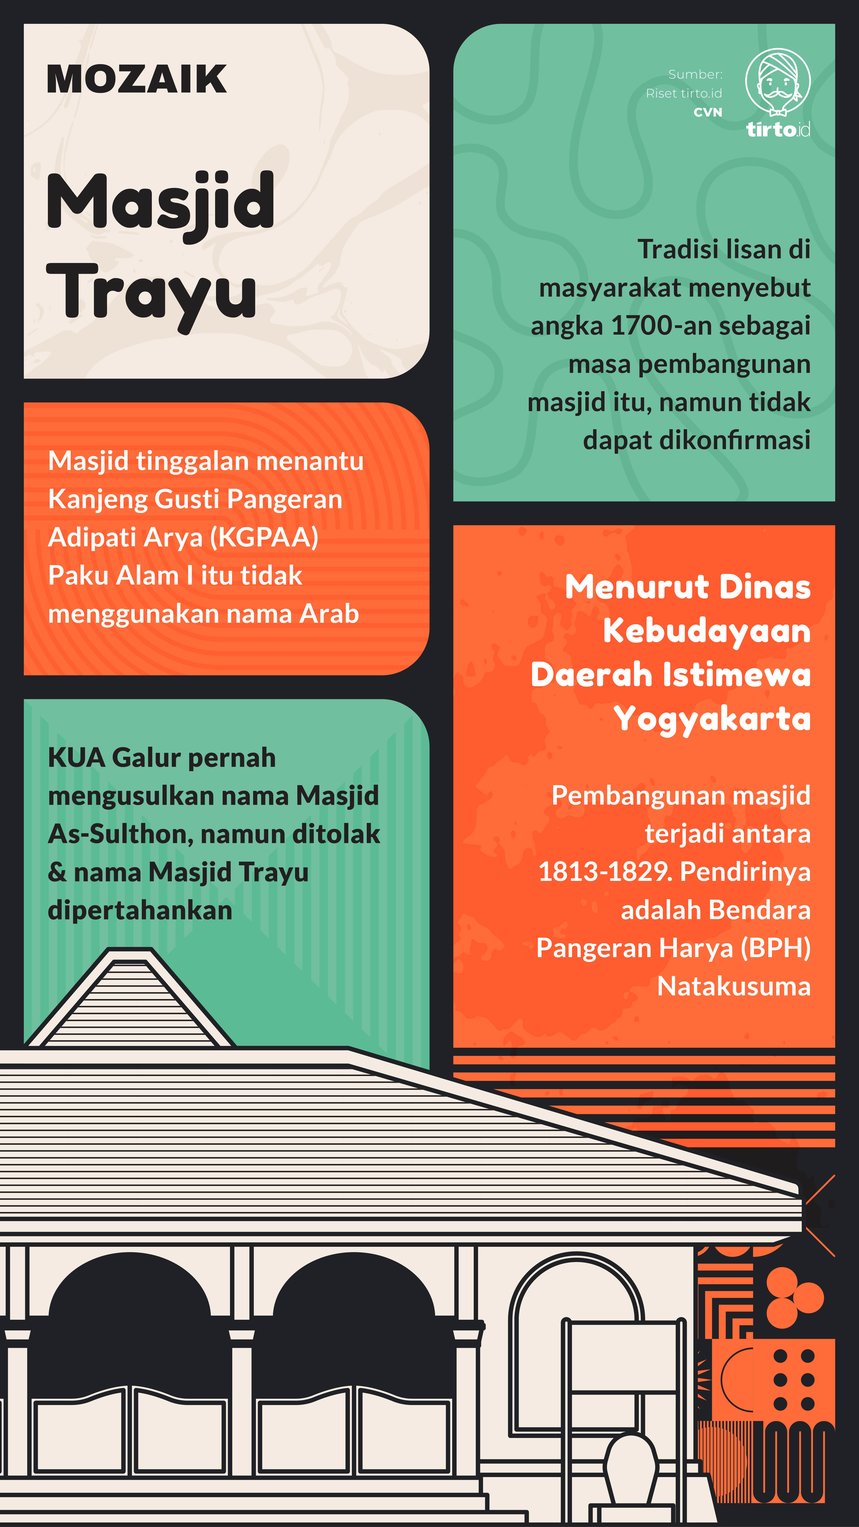 Infografik Mozaik Masjid Trayu